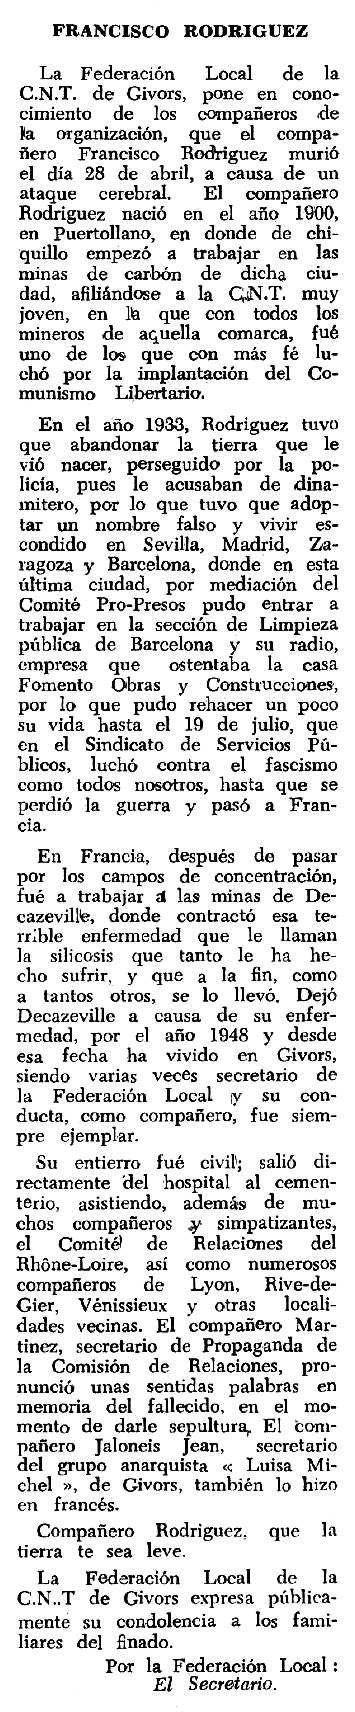 Necrològica de Francisco Rodríguez apareguda en el periòdic tolosà "Espoir" del 2 d'octubre de 1966